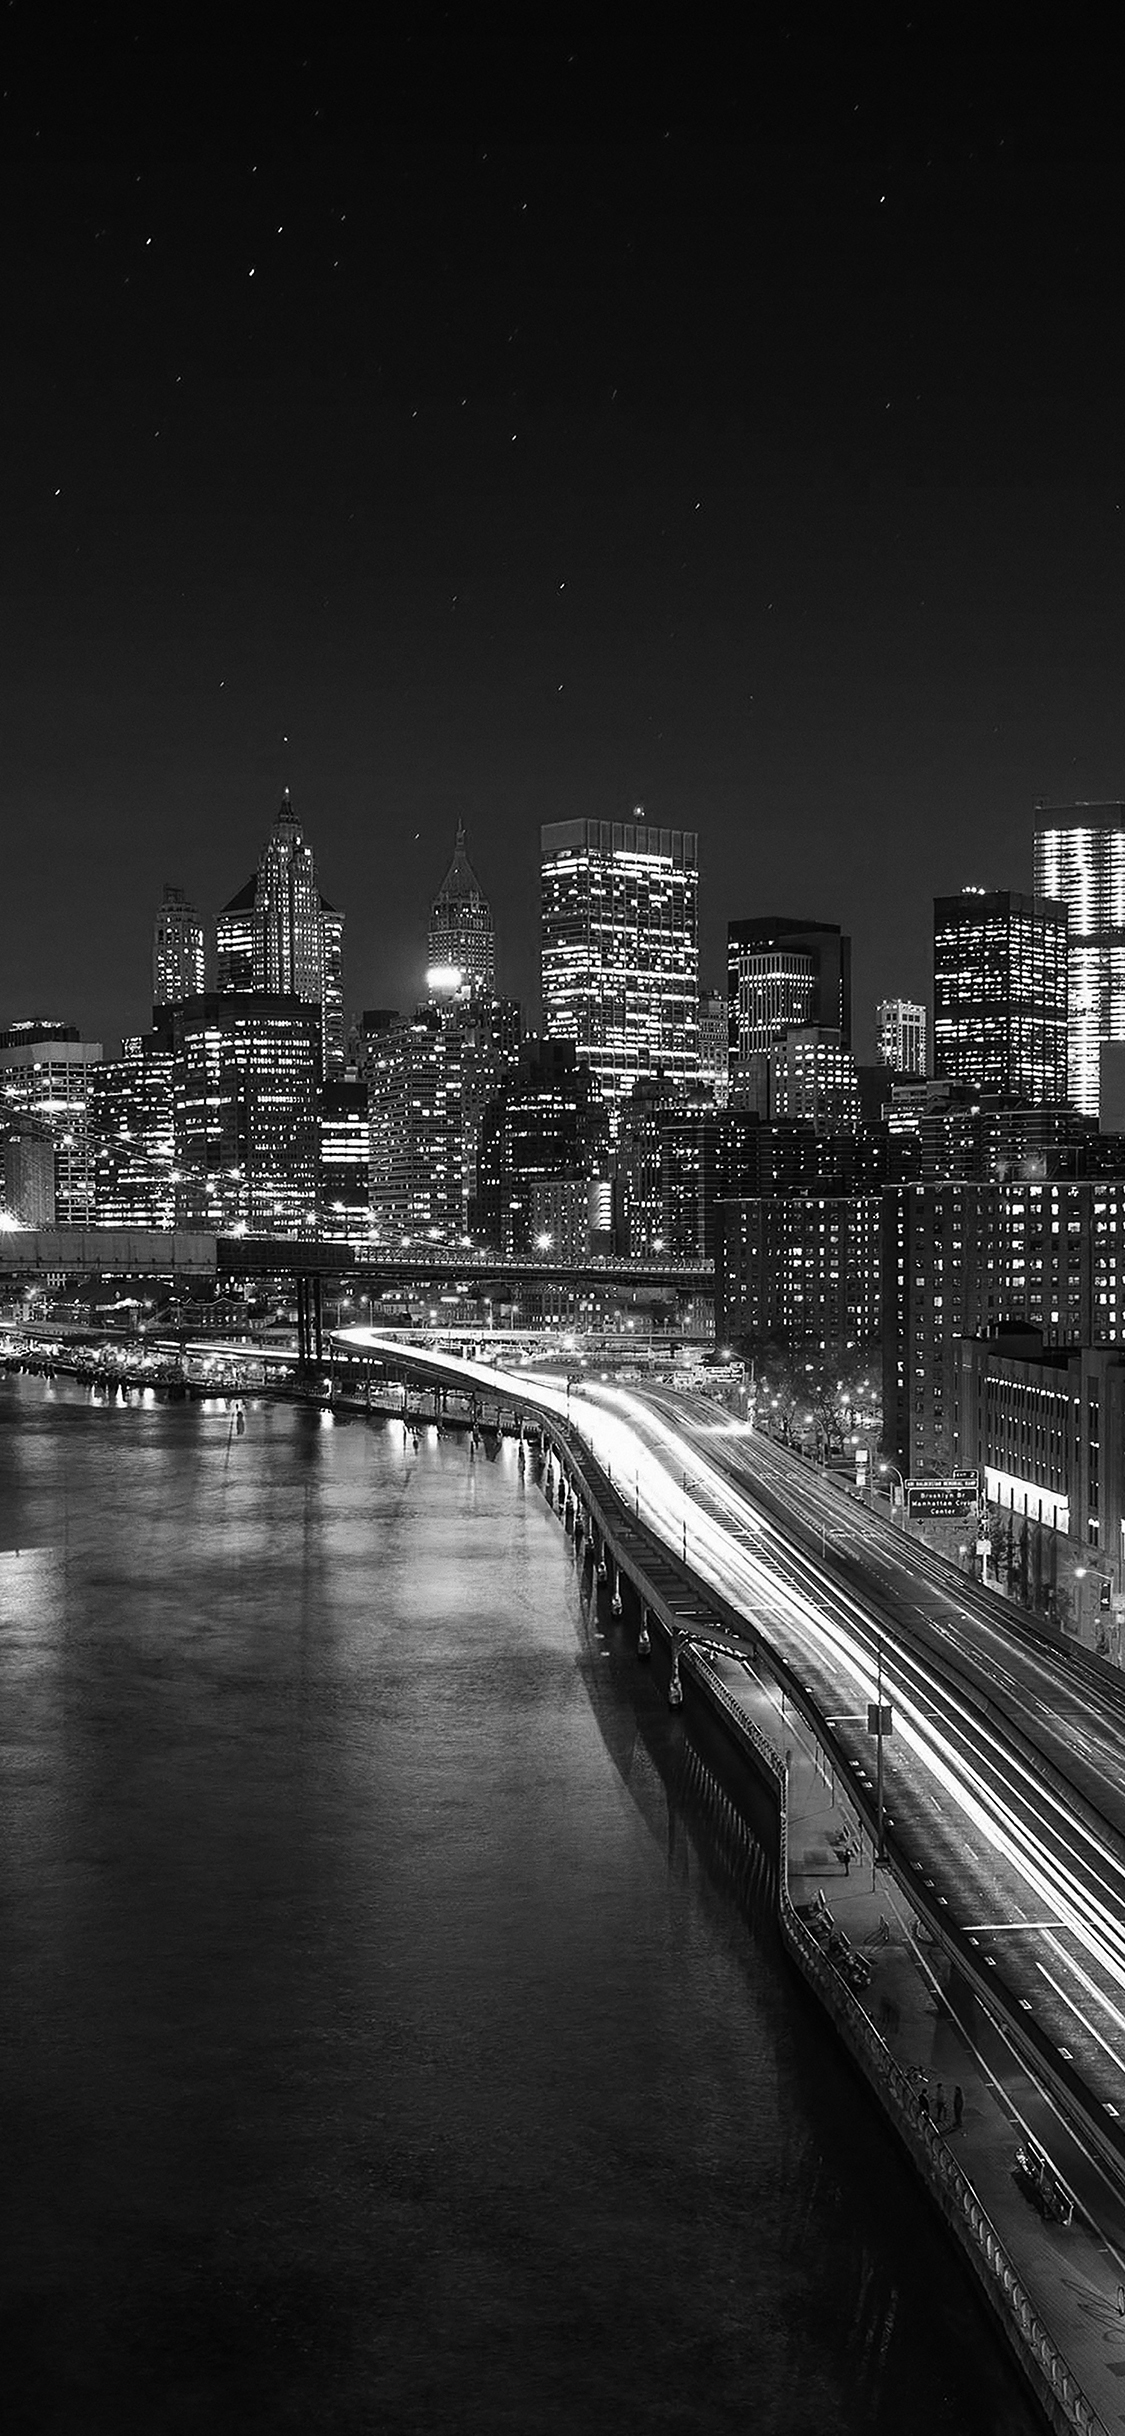 Night city view lights iPhone wallpaper 